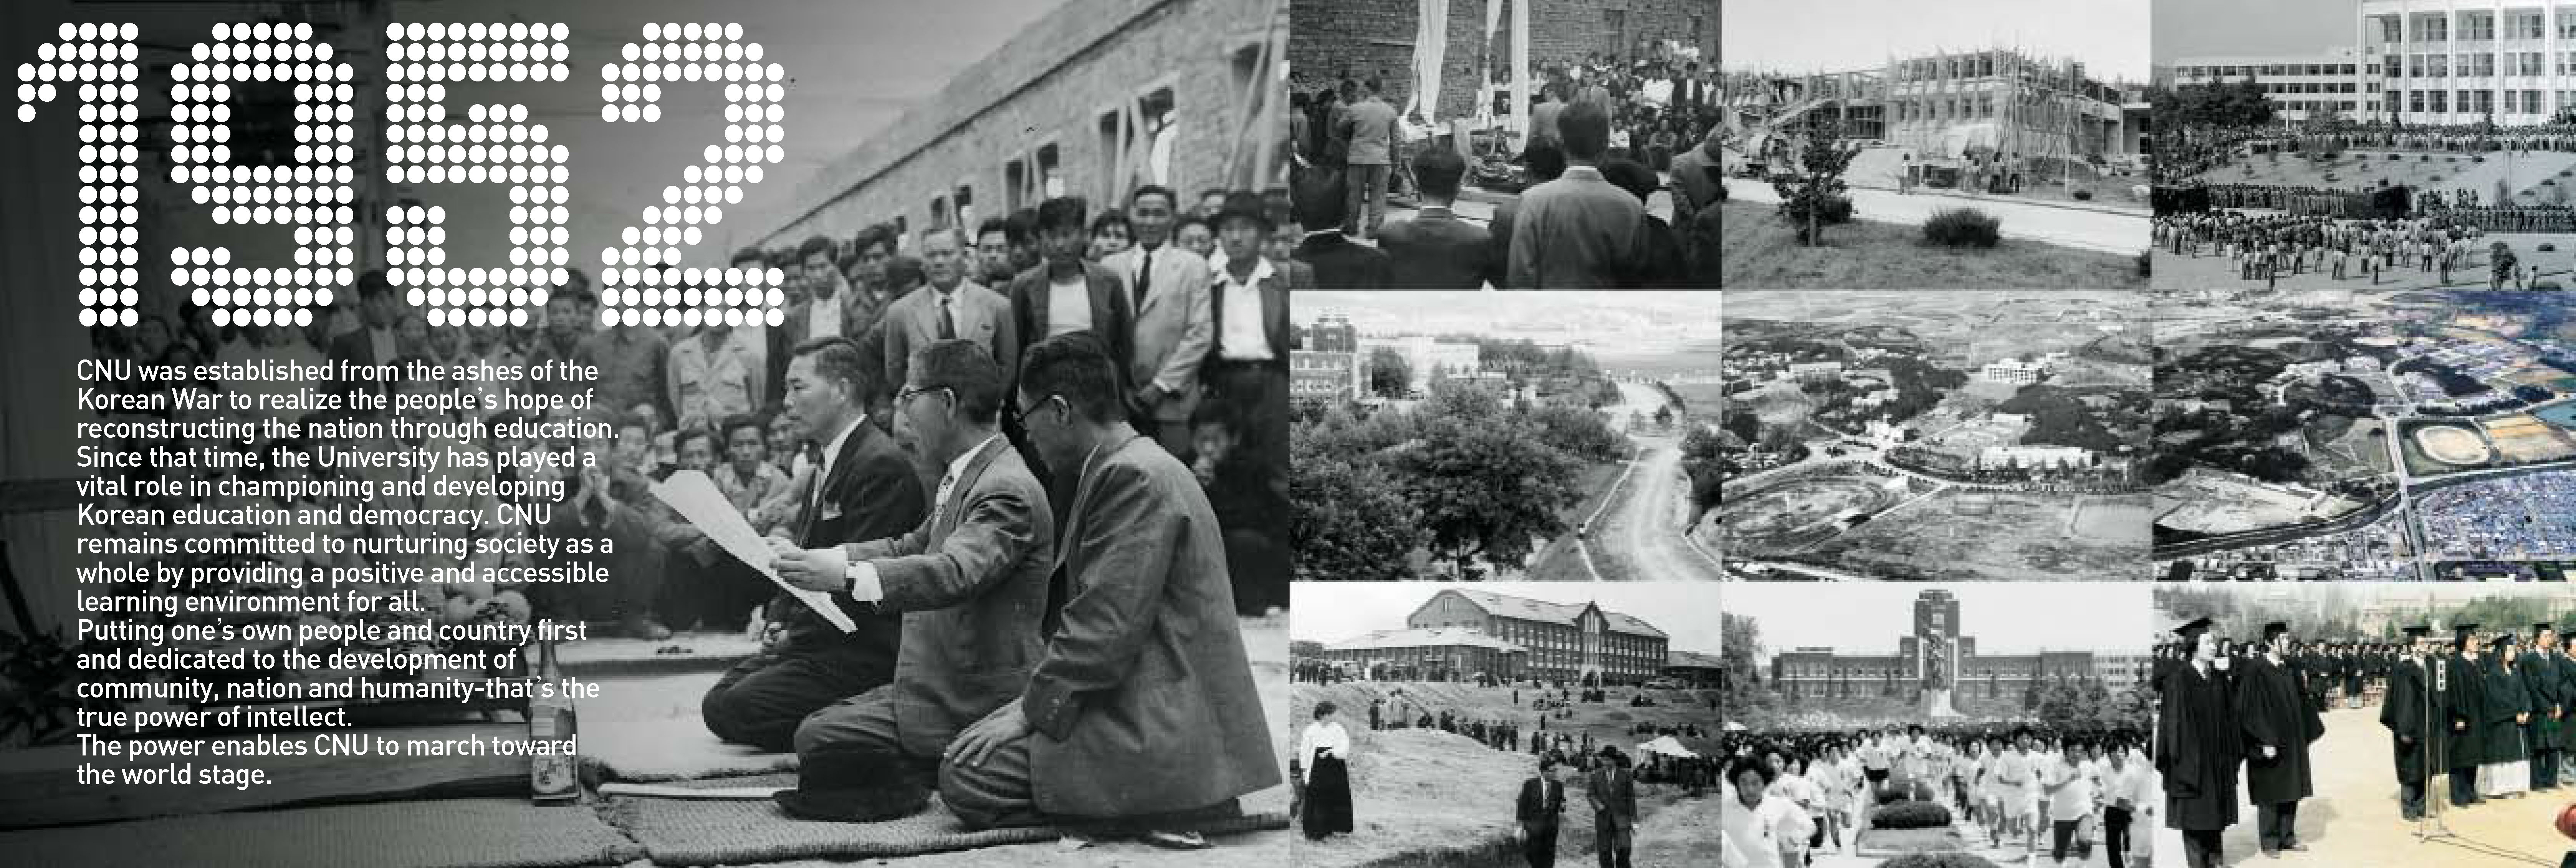 1952 CNU history